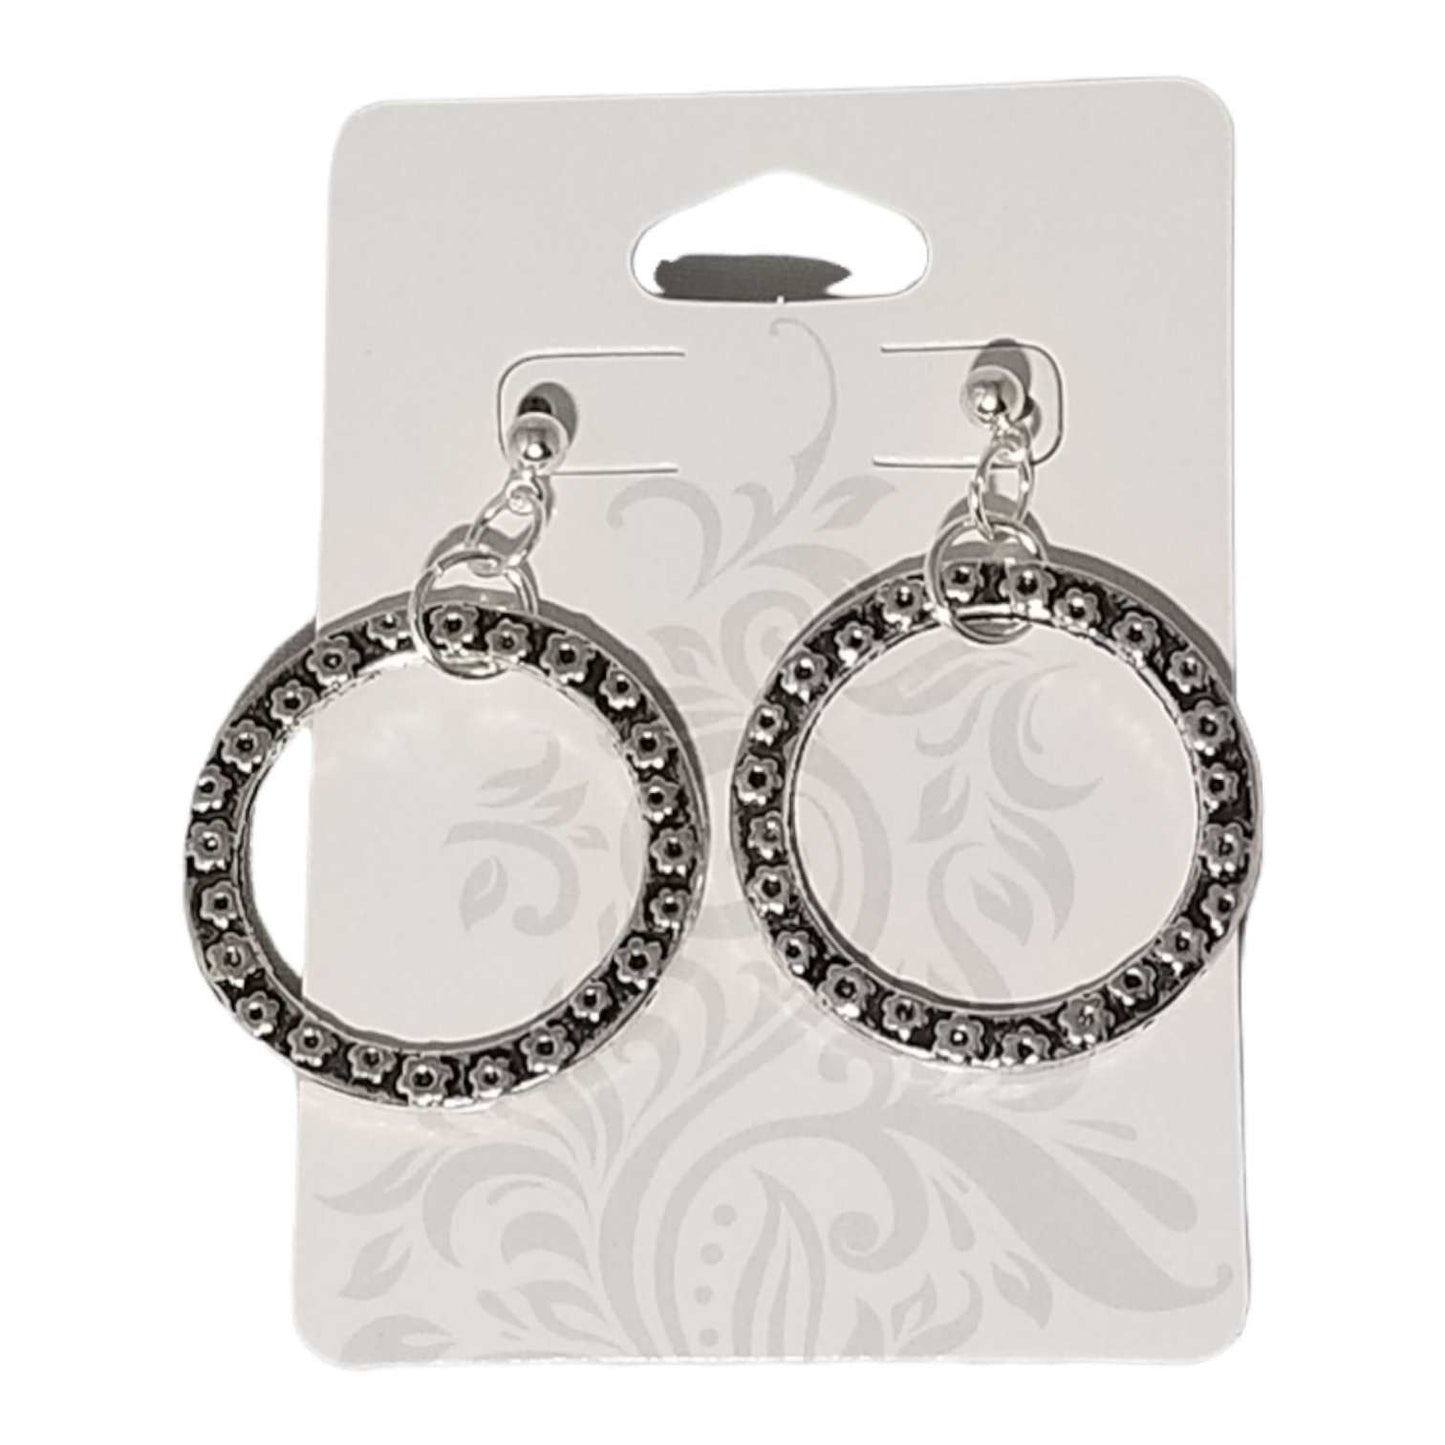 Women's Silver Hoop Earrings With Engraved Floral Design